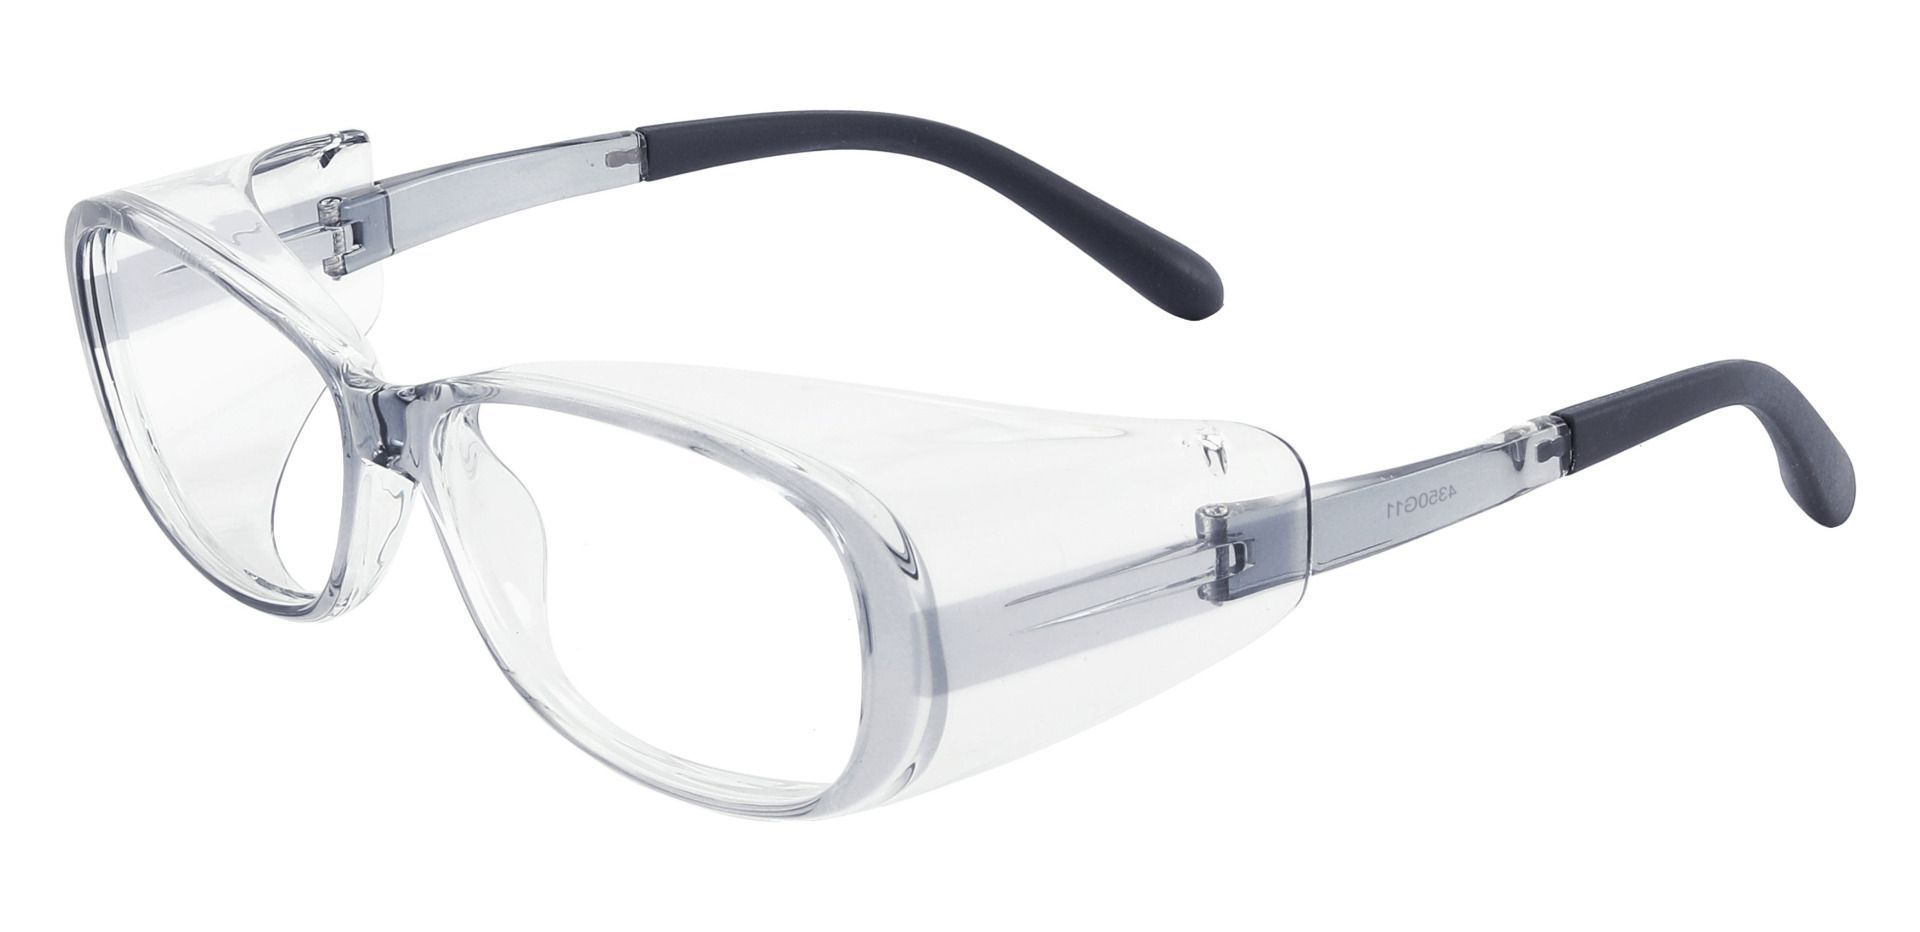 Omega Sports Goggles Eyeglasses Frame - Gray